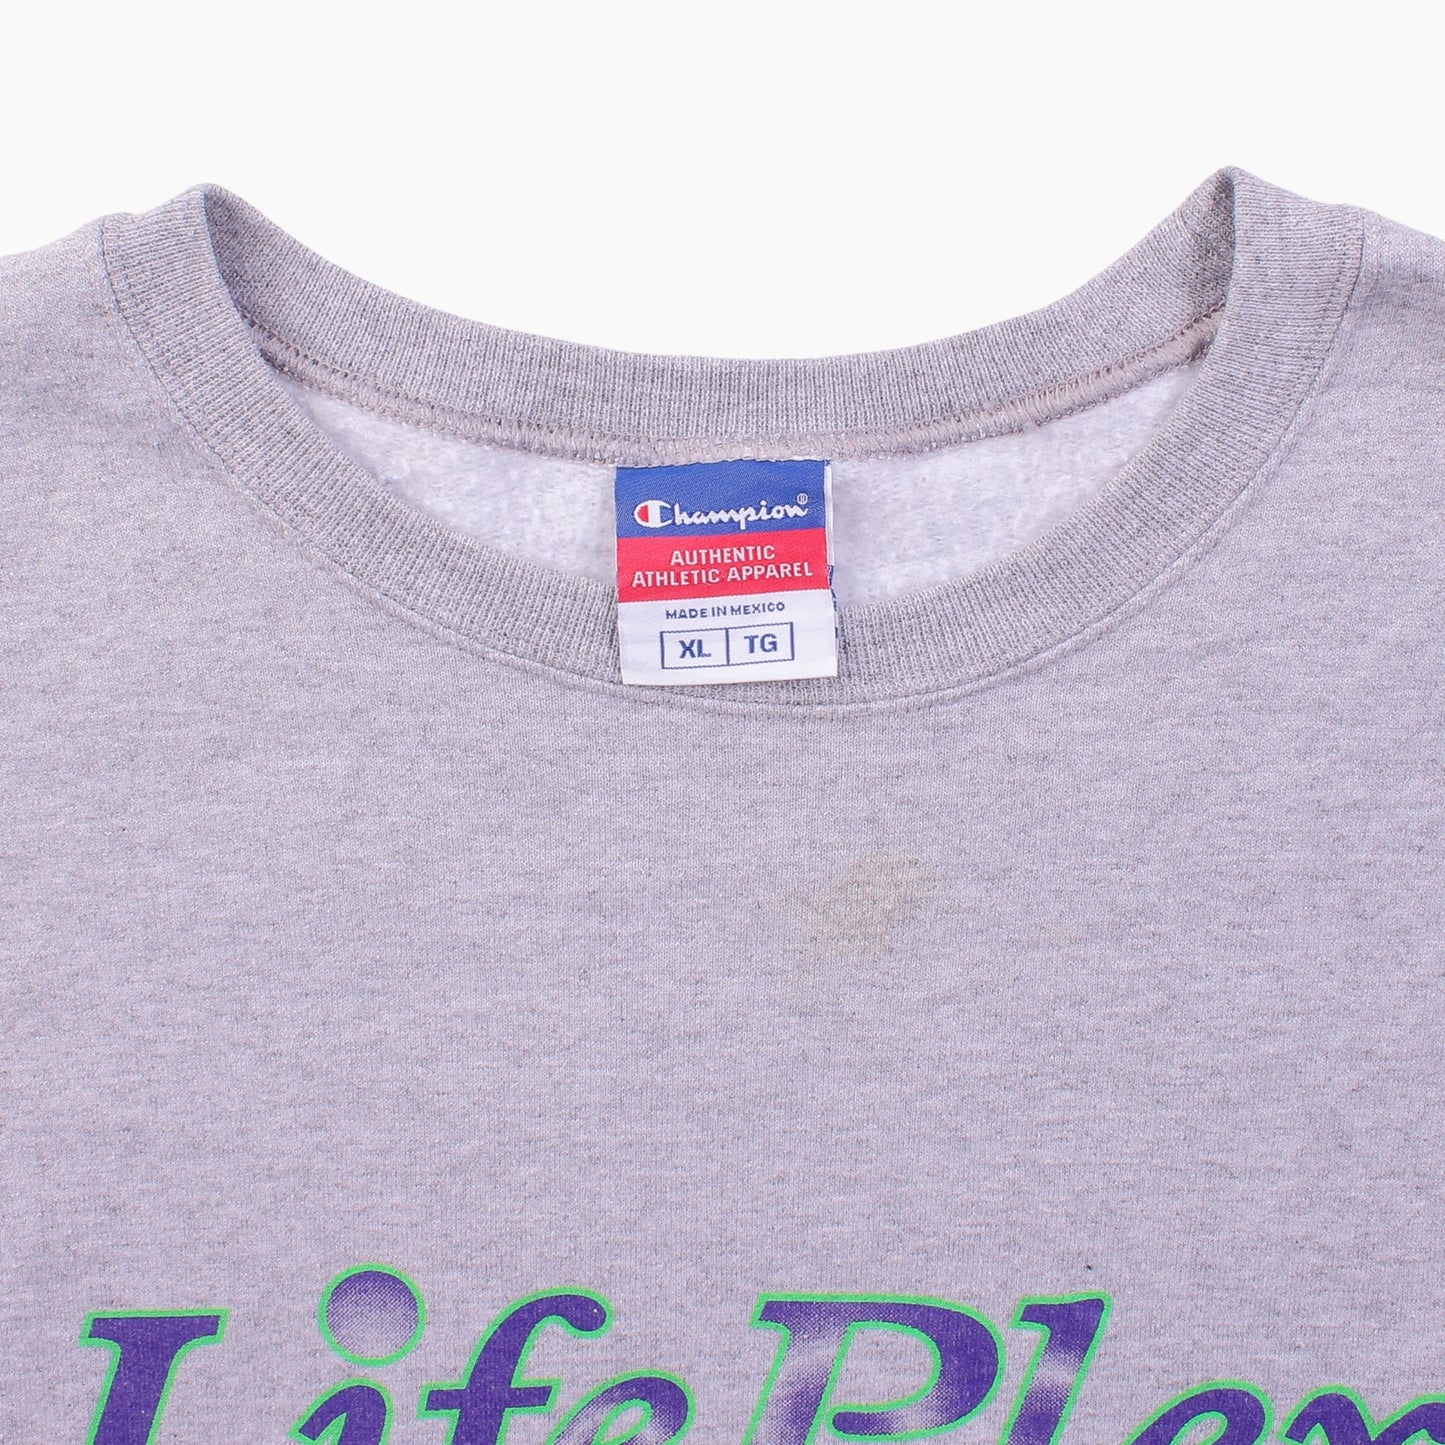 Vintage 'LifePlex' Champion Sweatshirt - American Madness